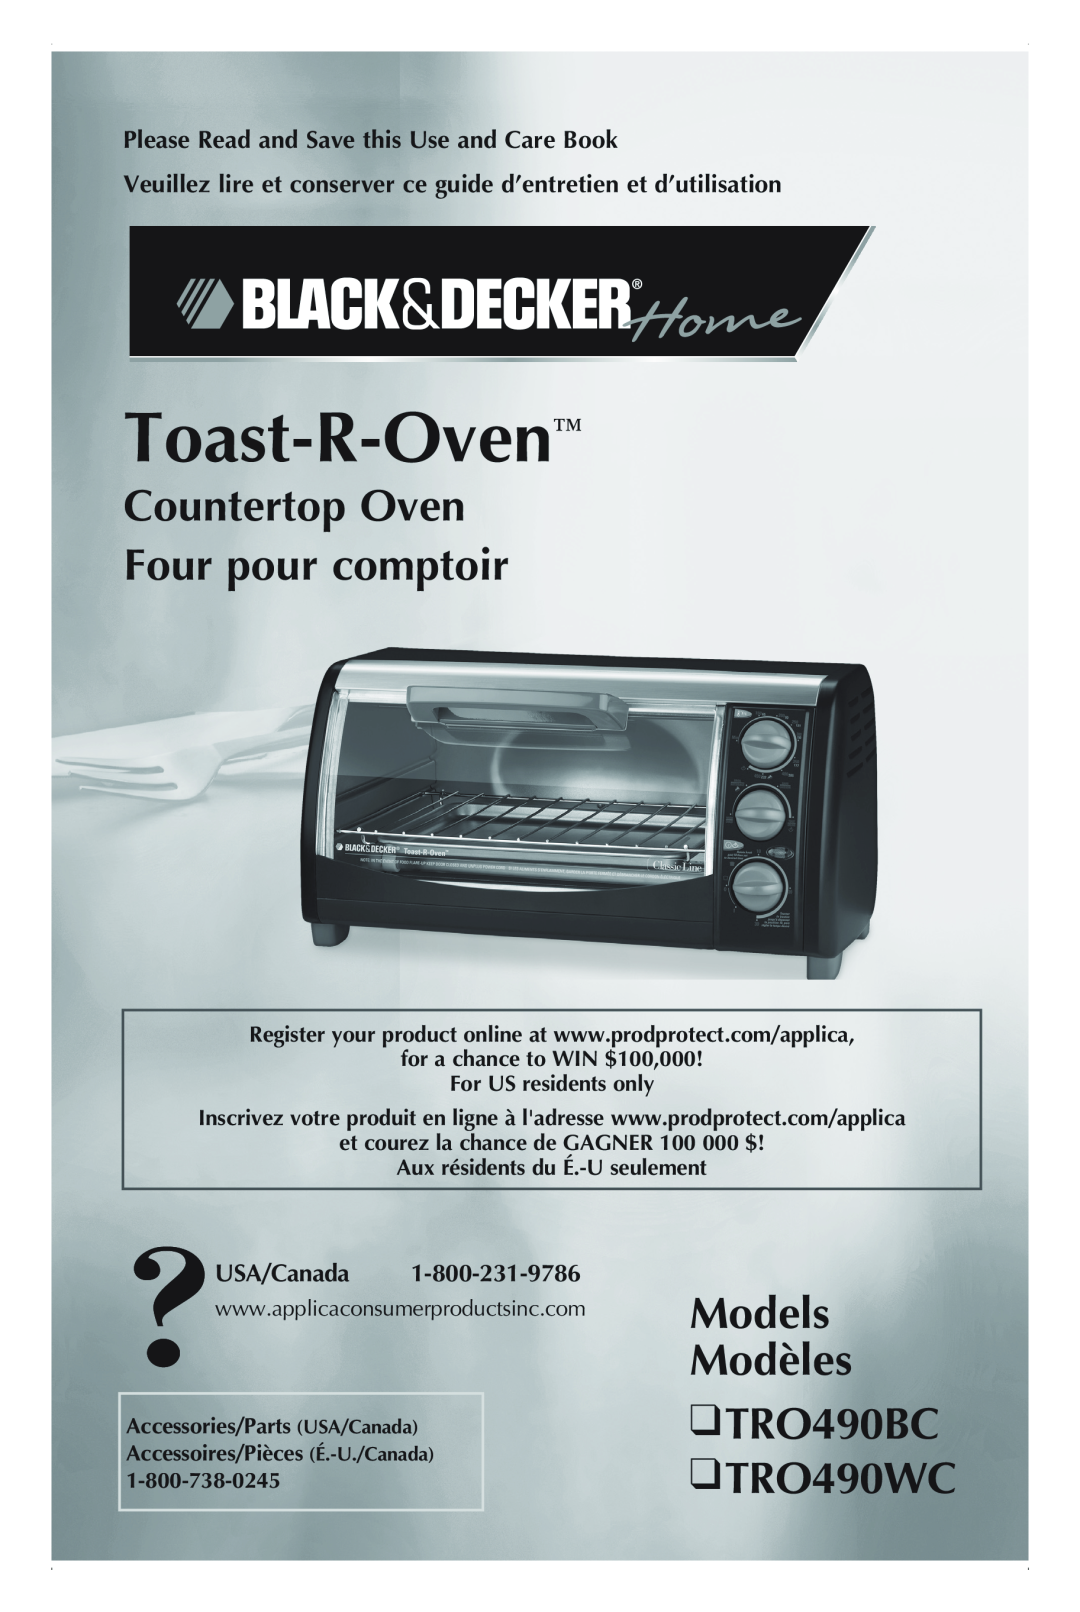 Black & Decker manual Countertop Oven Four pour comptoir, Models Modèles TRO490BC TRO490WC, Toast-R-Oven, USA/Canada 